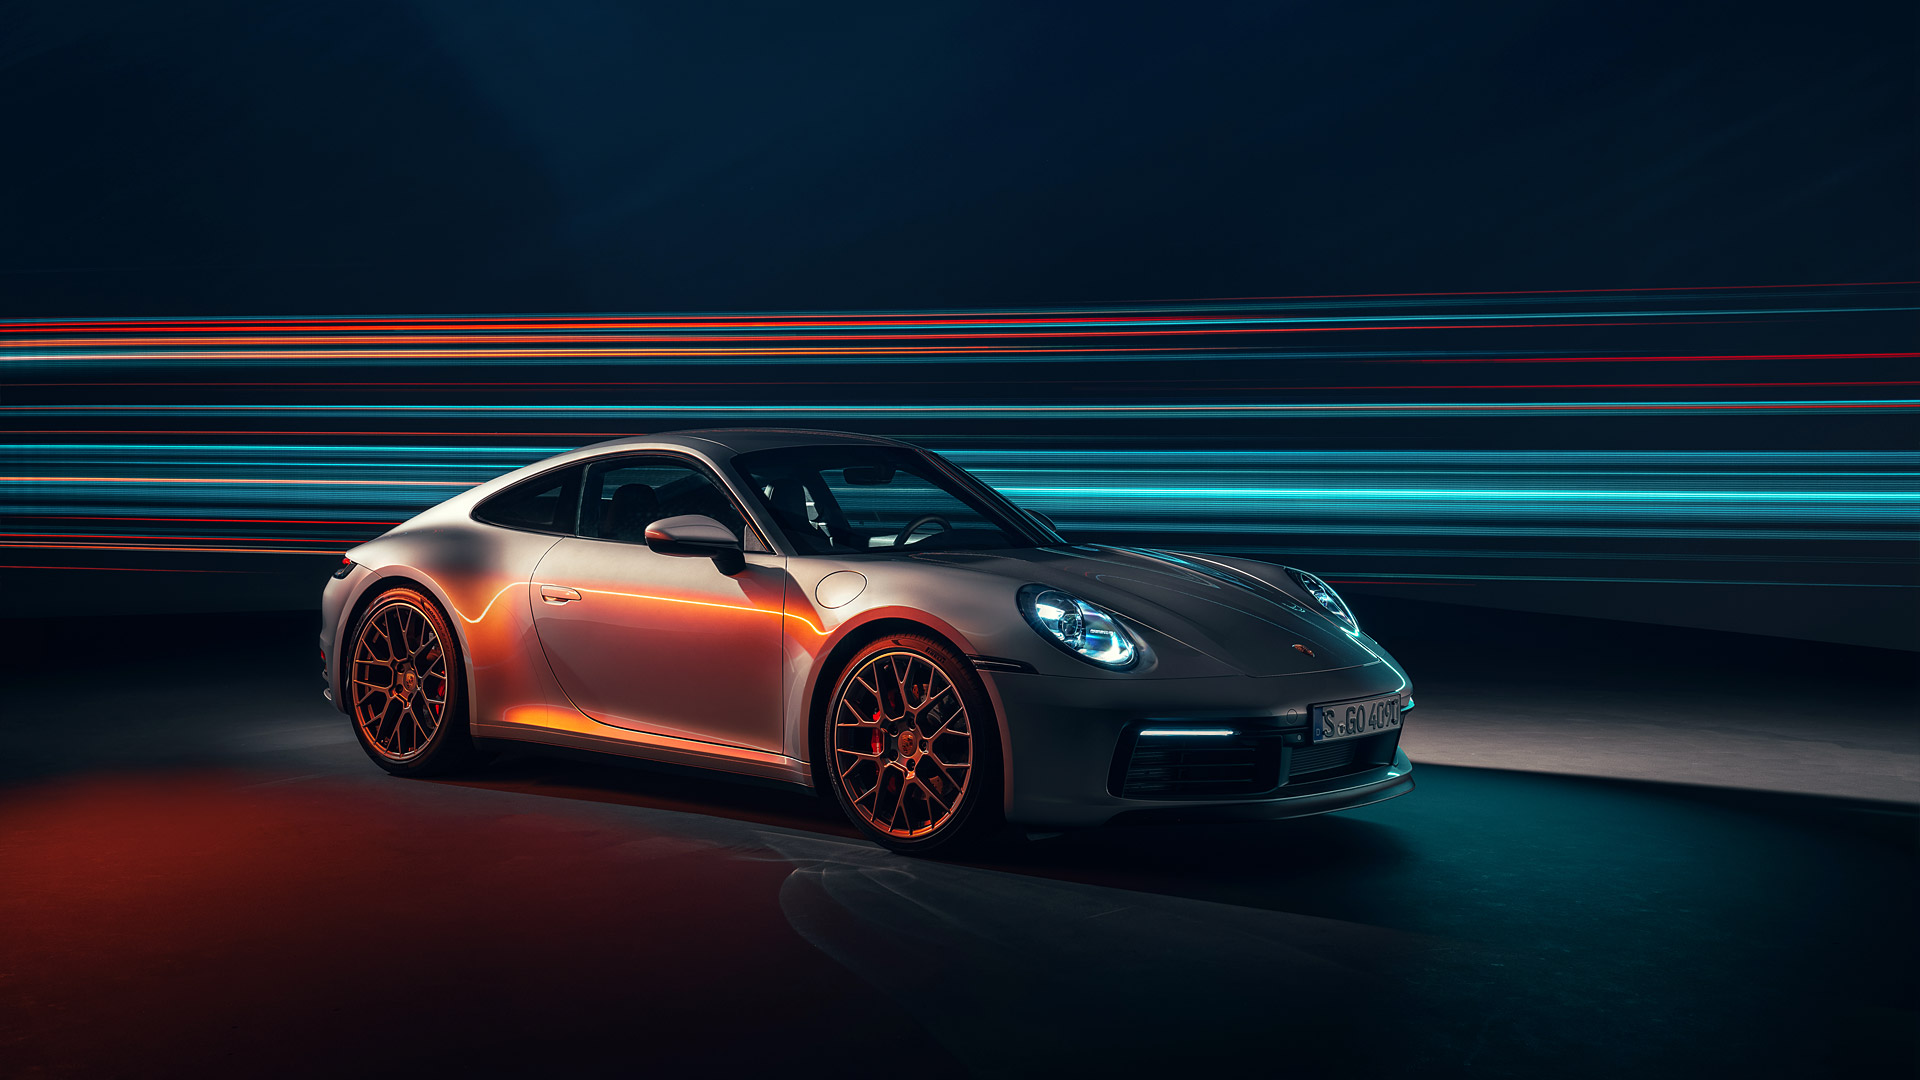 2019 Porsche 911 Carrera 4S Wallpapers HD Images   WSupercars